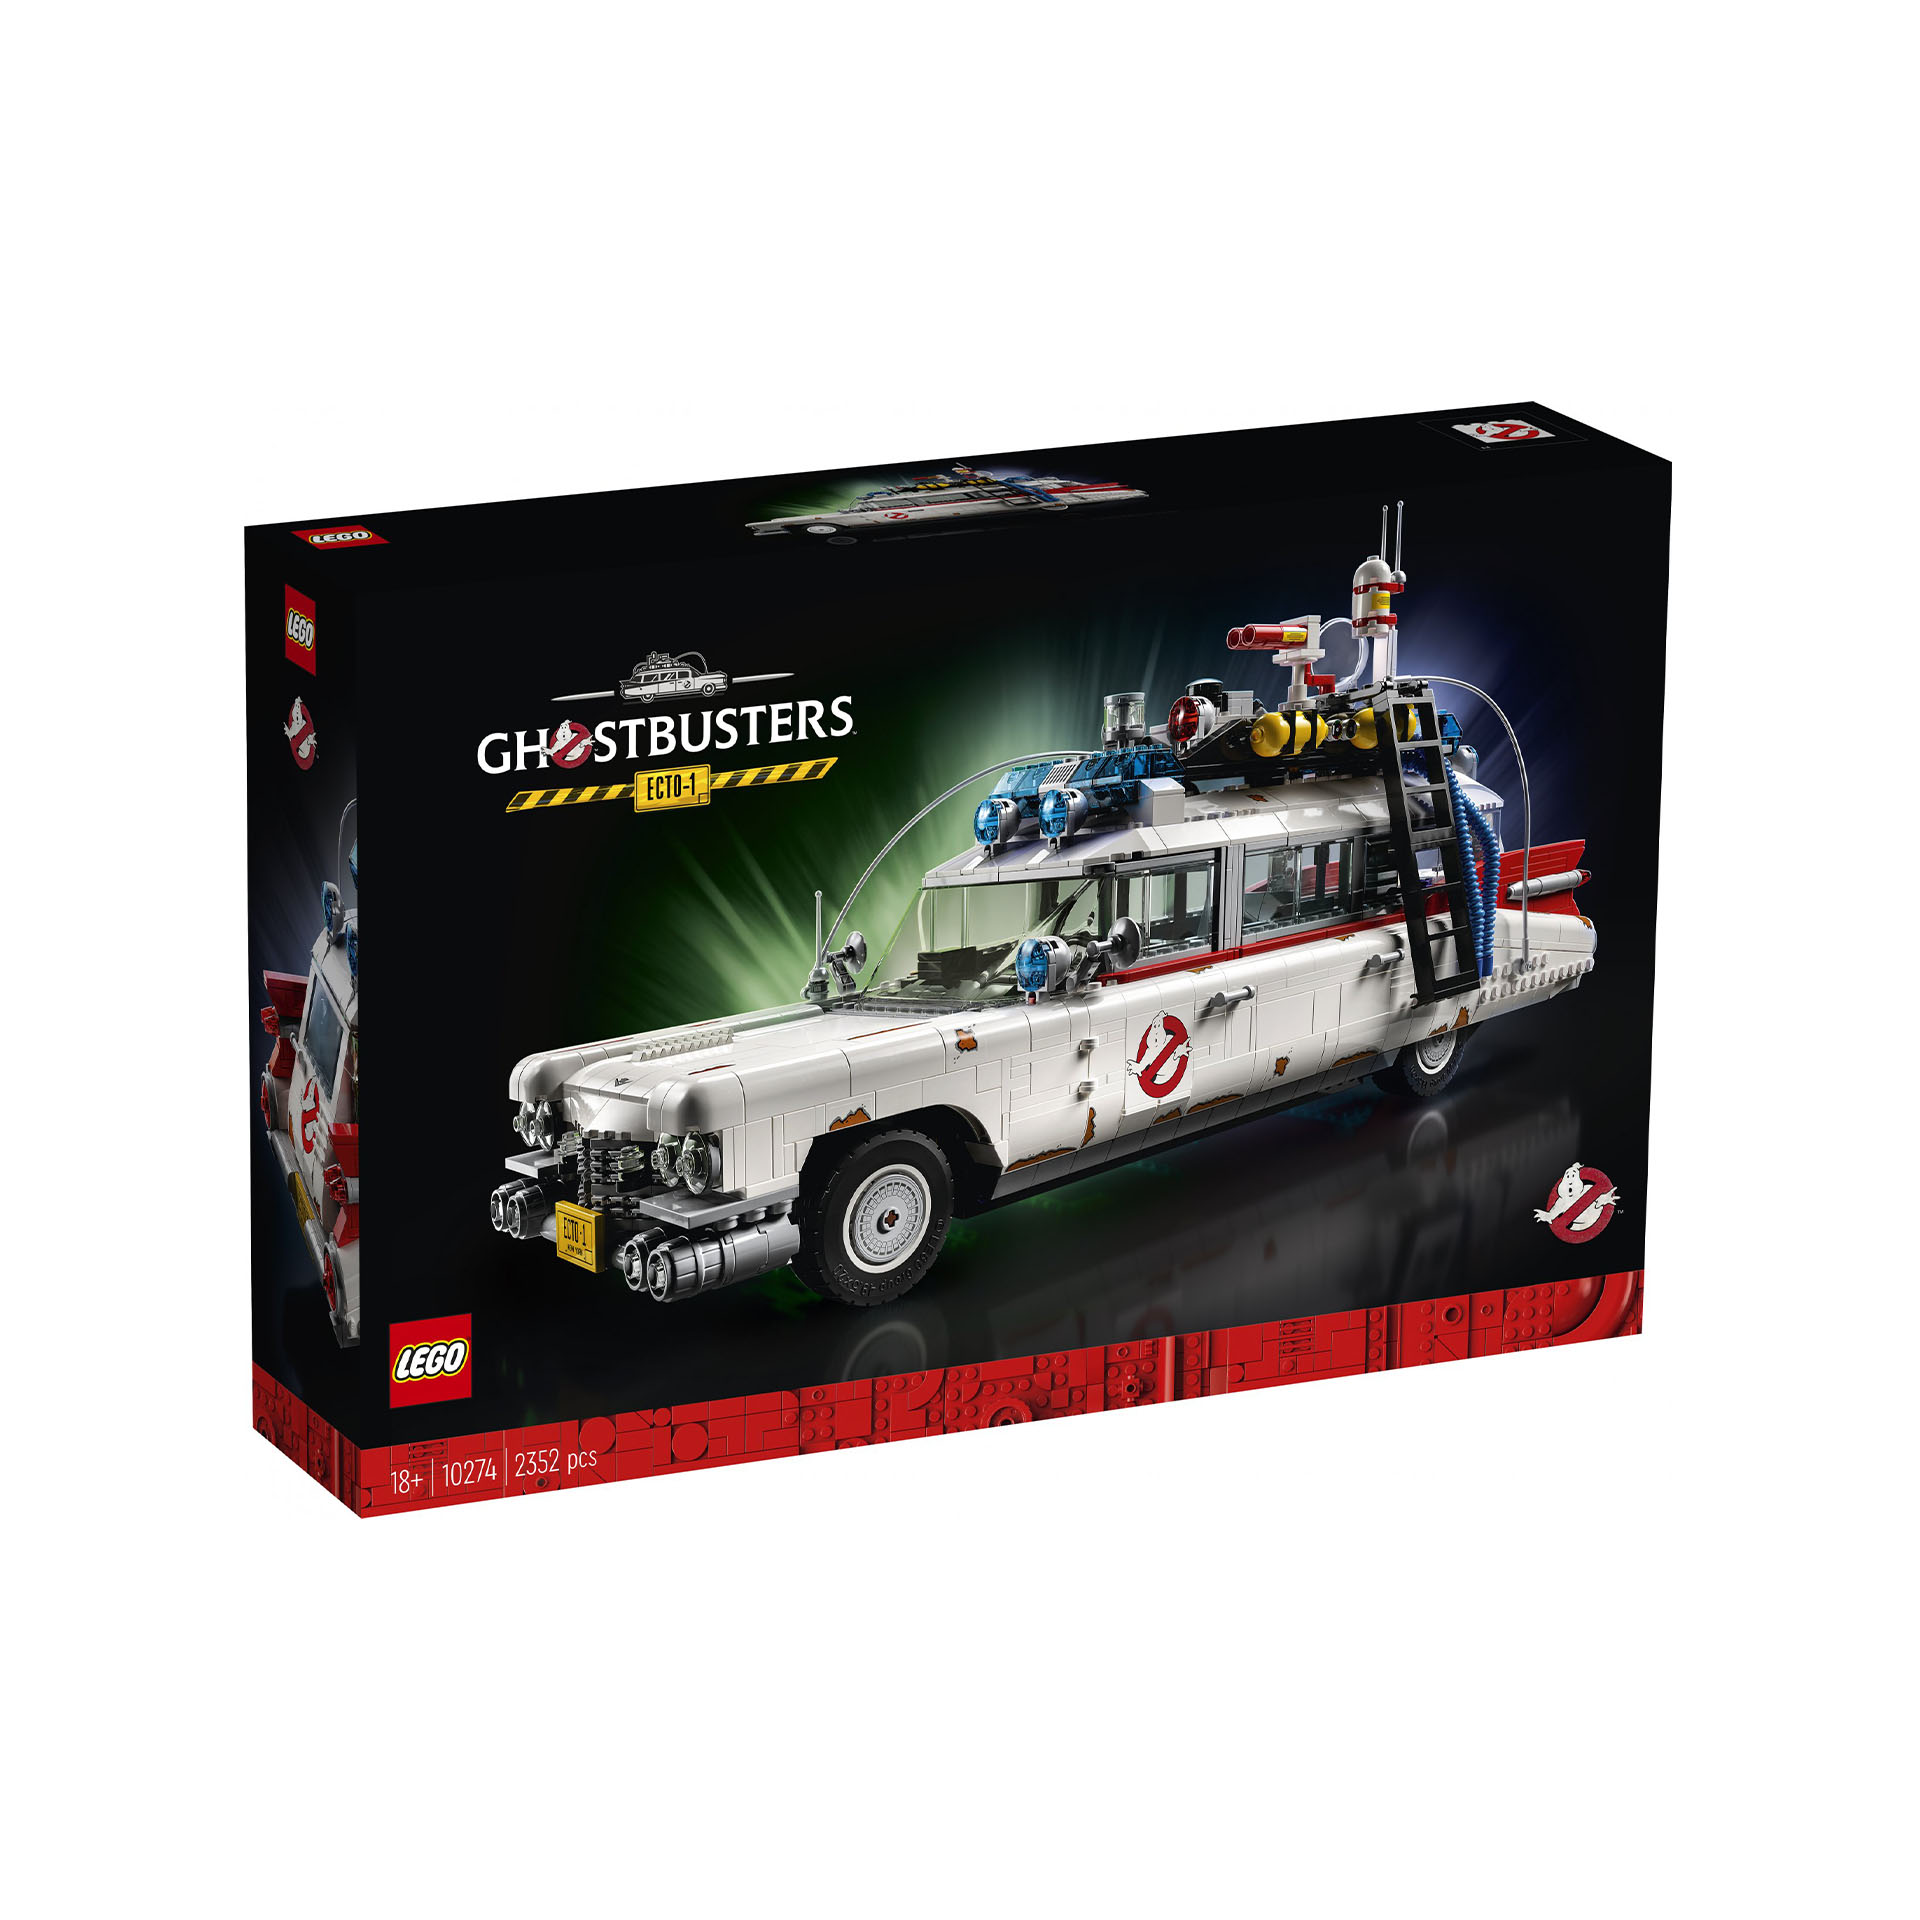 LEGO Creator Expert ECTO-1 Ghostbusters, Macchina Grande da Collezione, Set da E 10274, , large